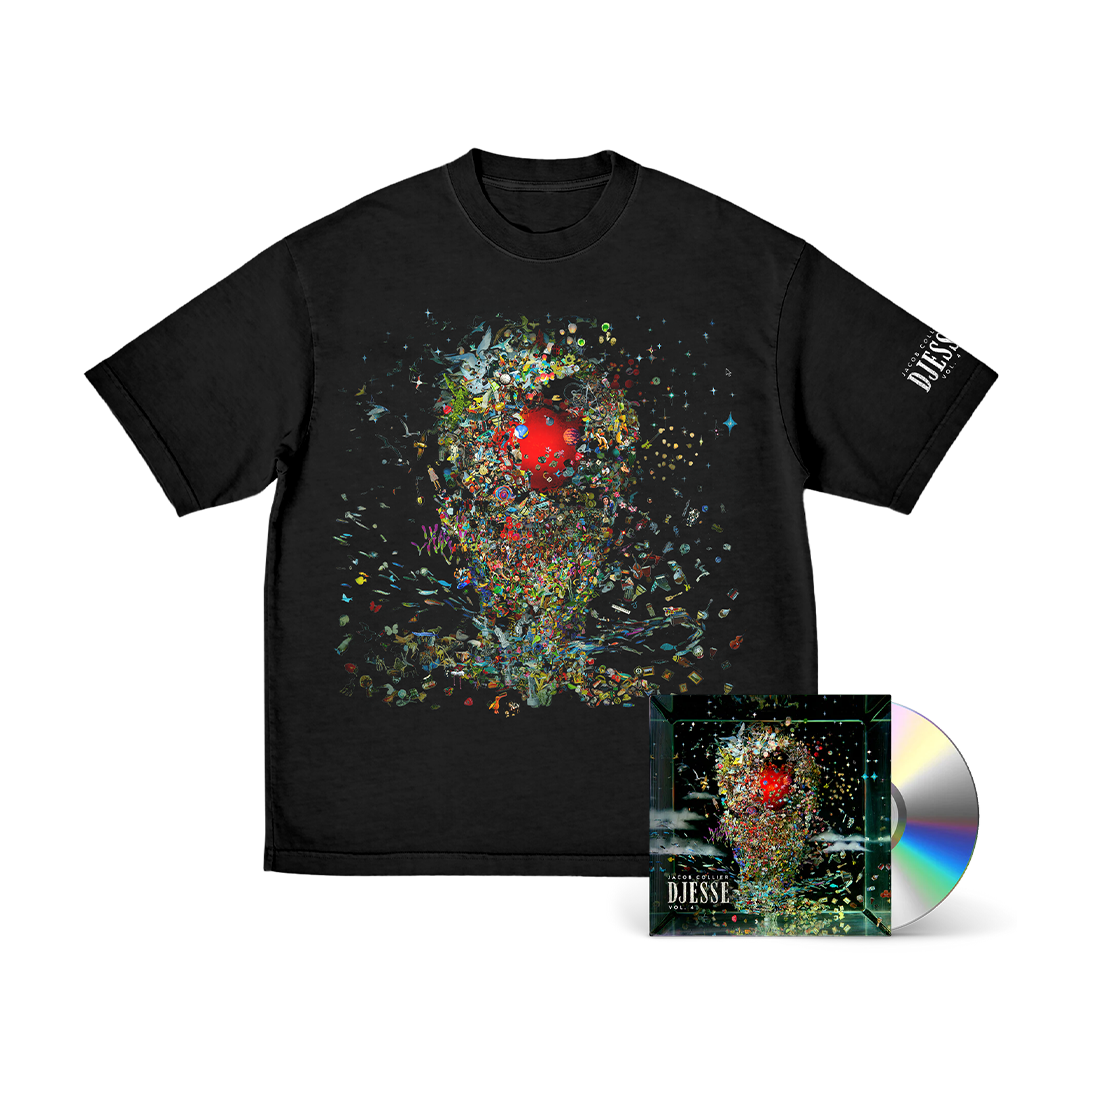 Djesse Vol. 4 CD + T-Shirt Bundle